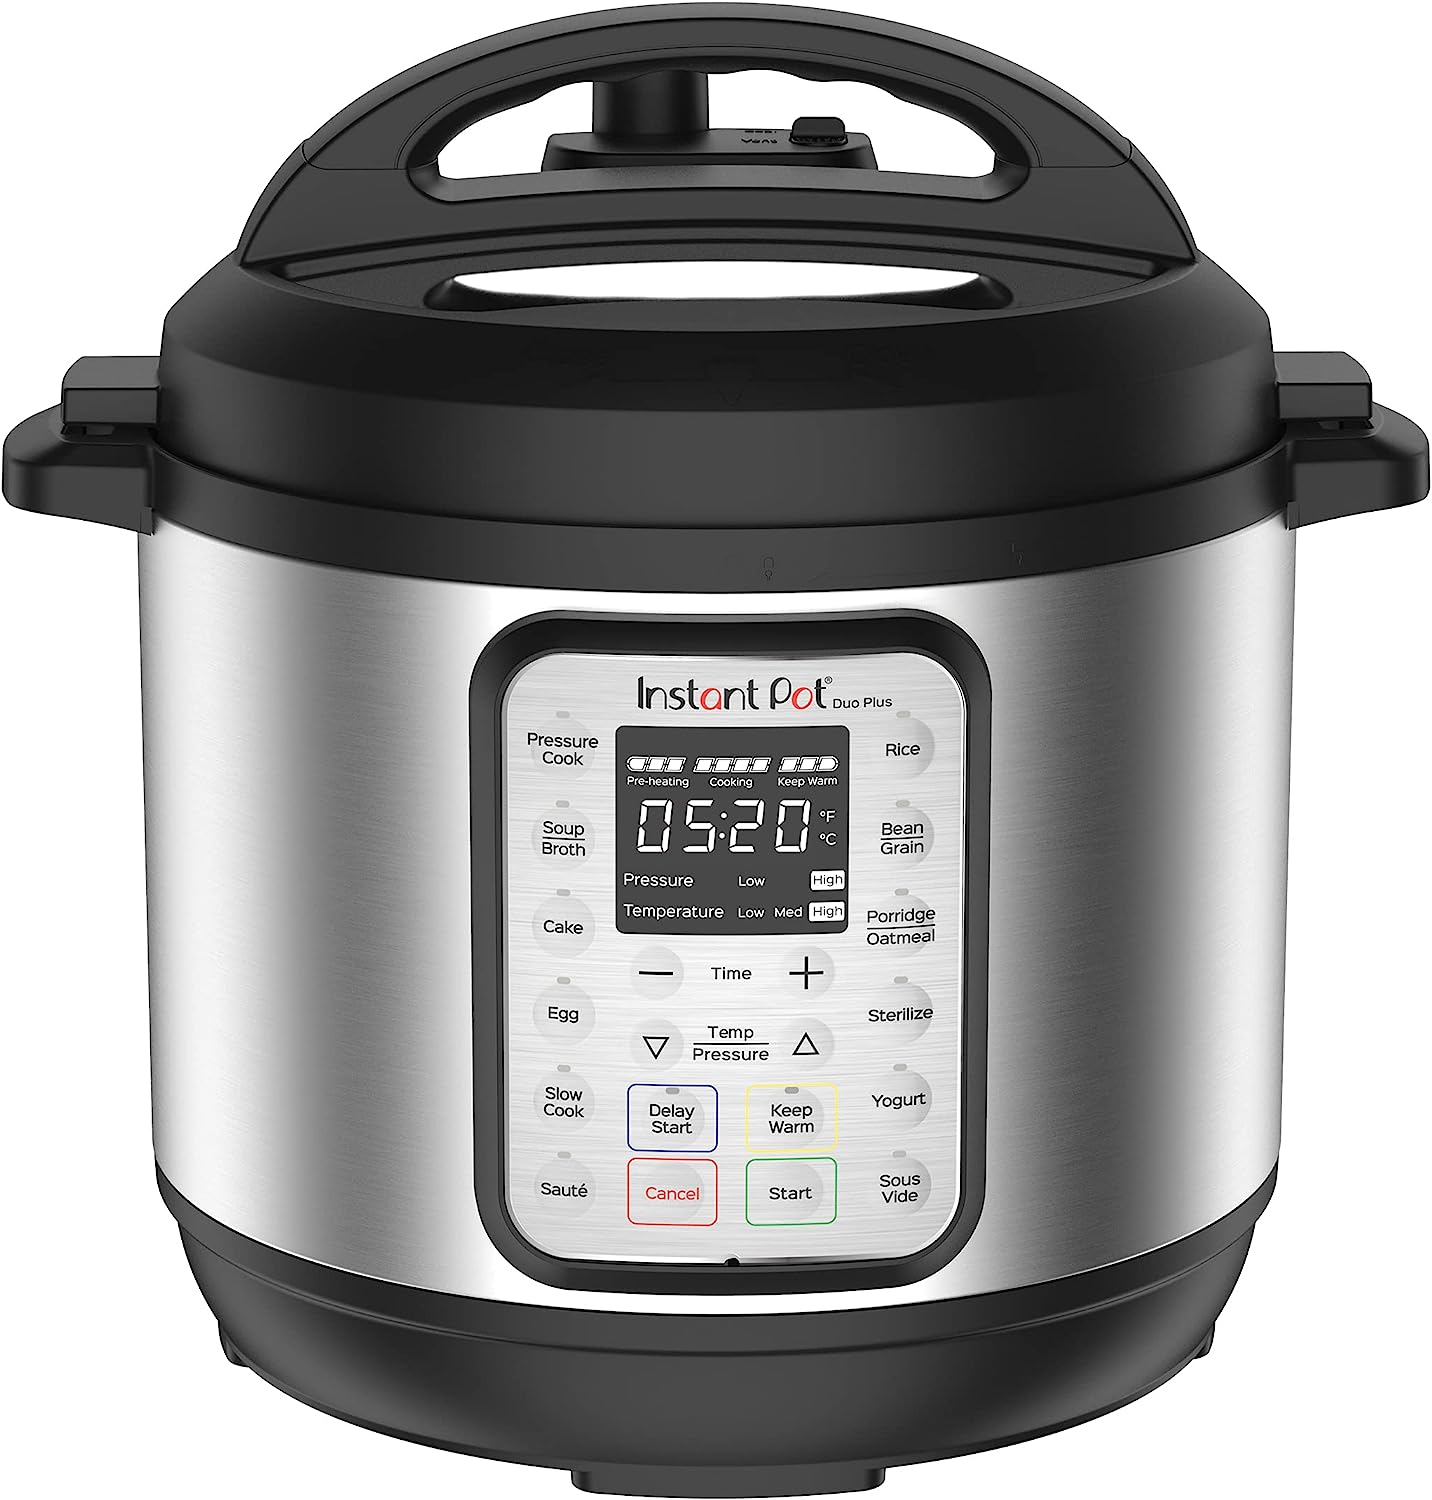 Pot Duo Plus 9-in-1 Electric Pressure Cooker